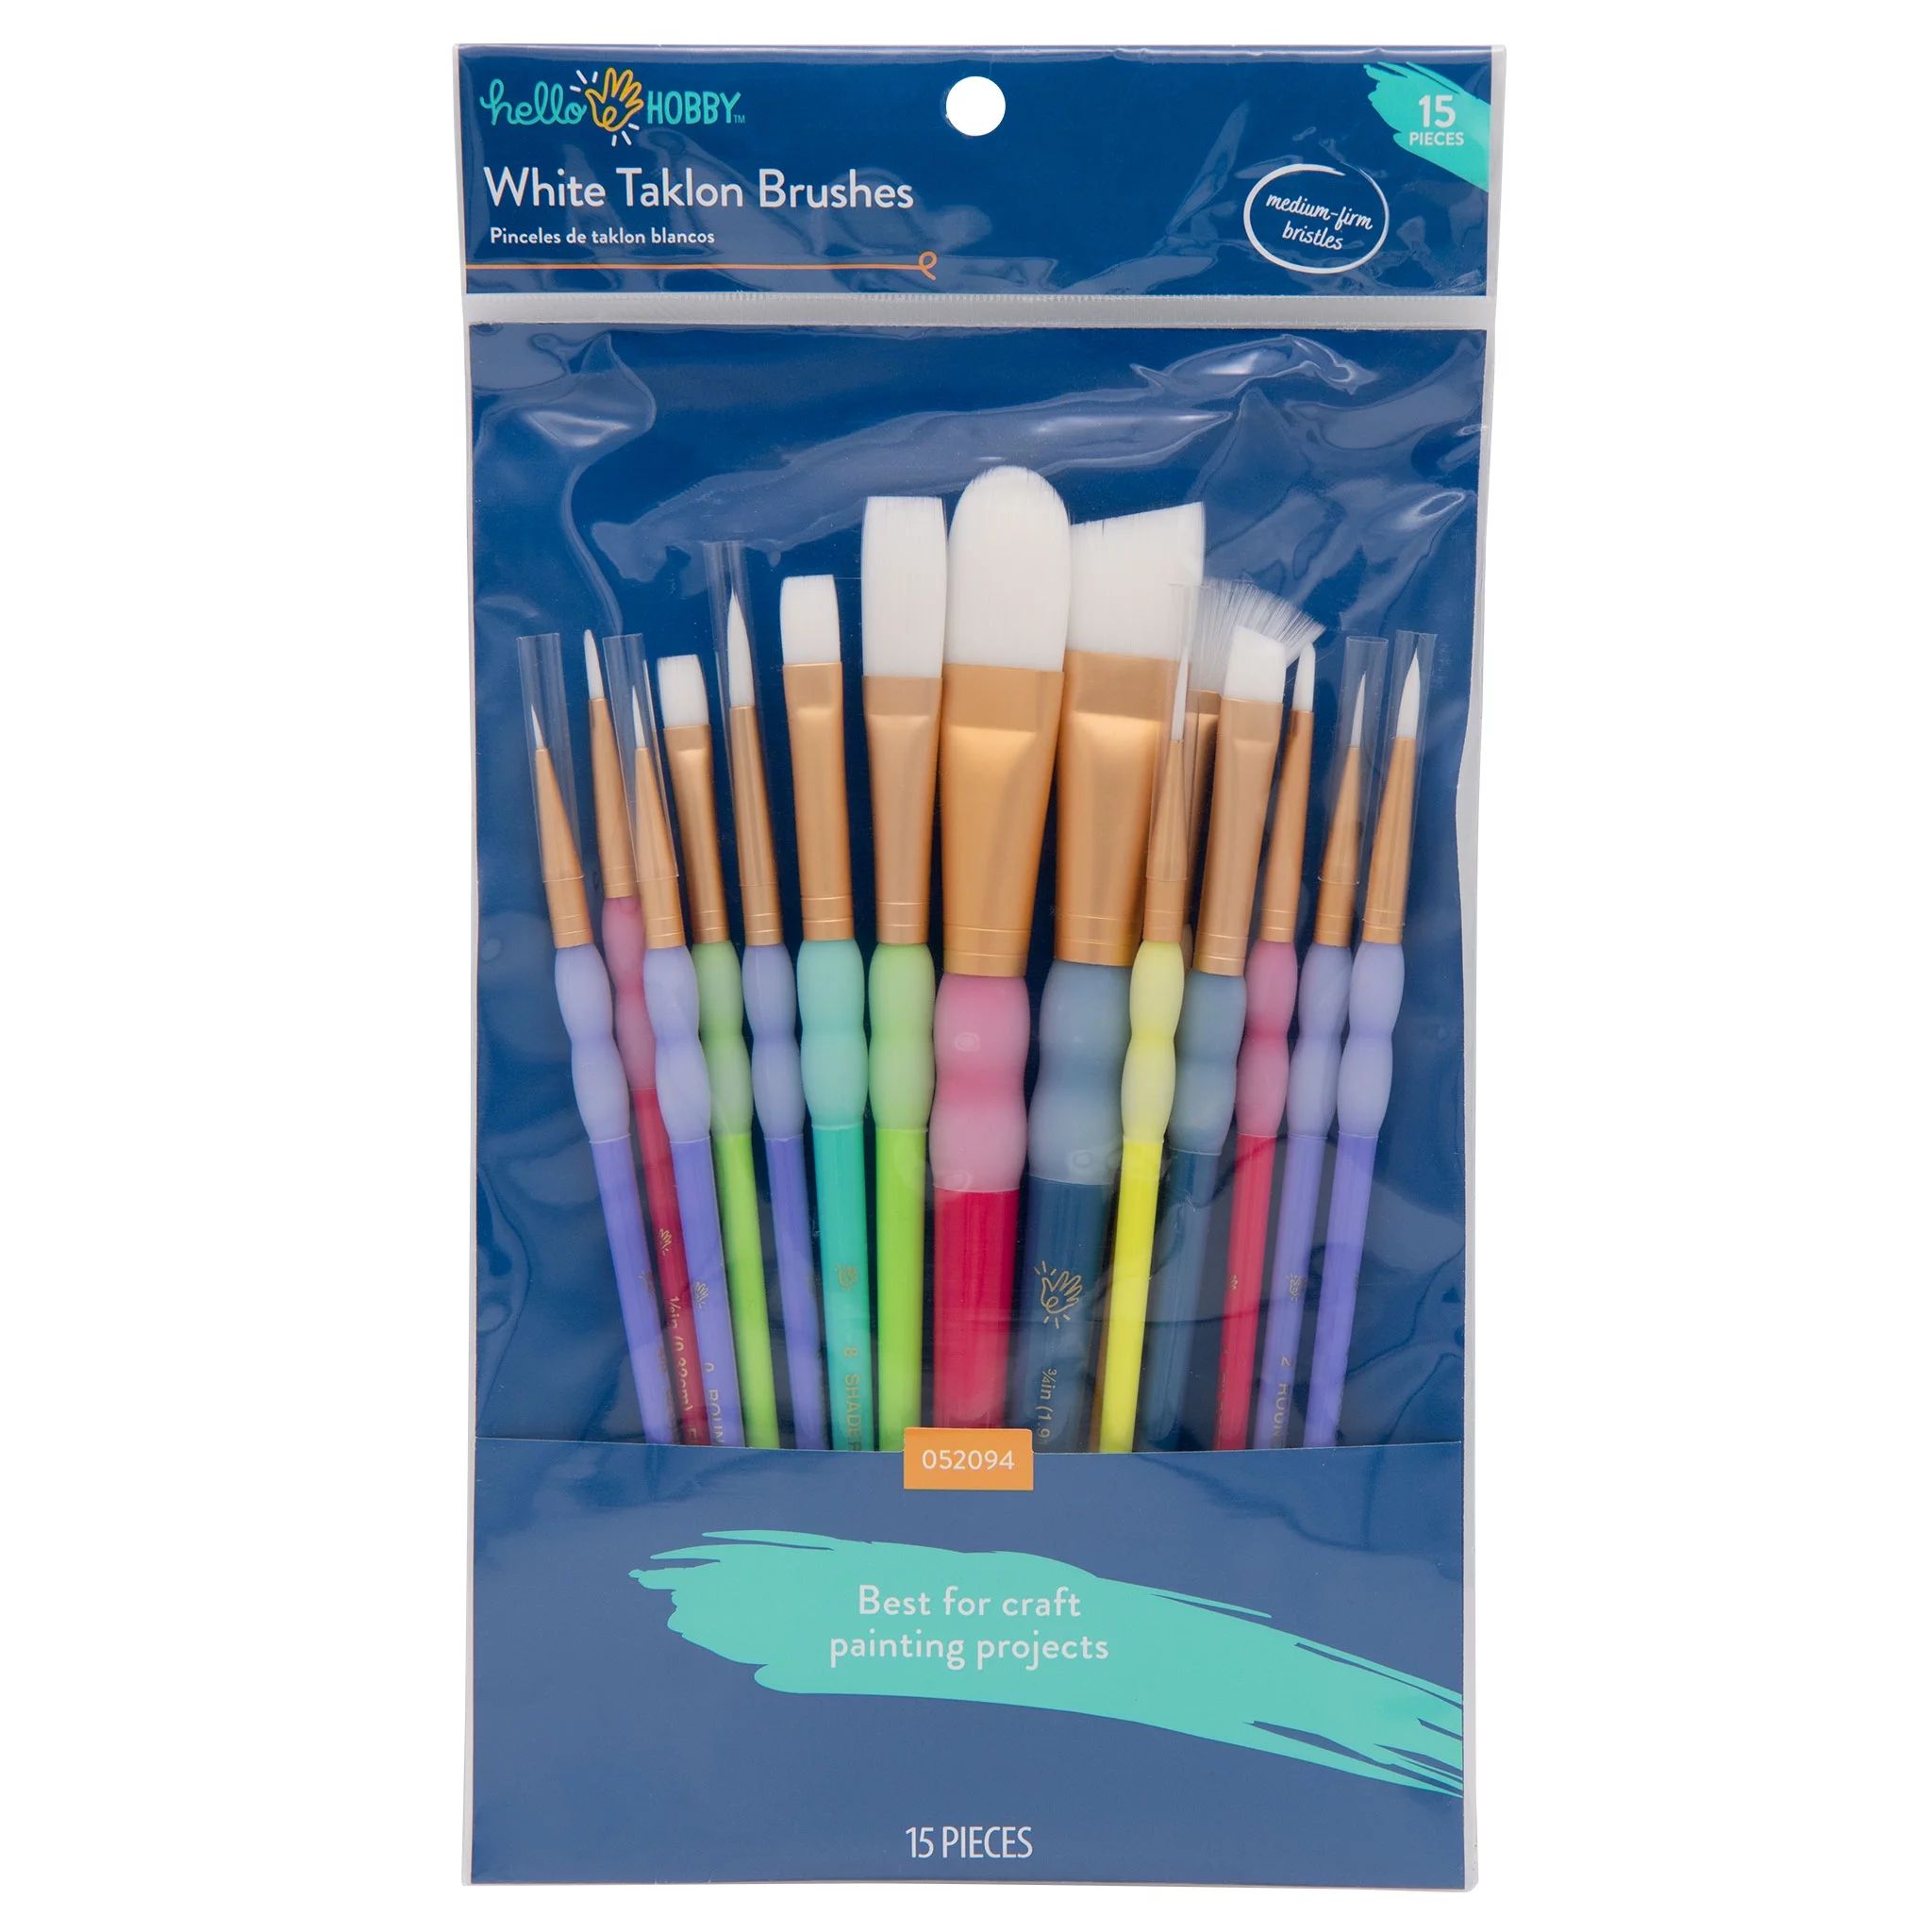 Hello Hobby Variety Craft White Taklon 15pc Synthetic Paint Brush Set, Adult, Teen | Walmart (US)